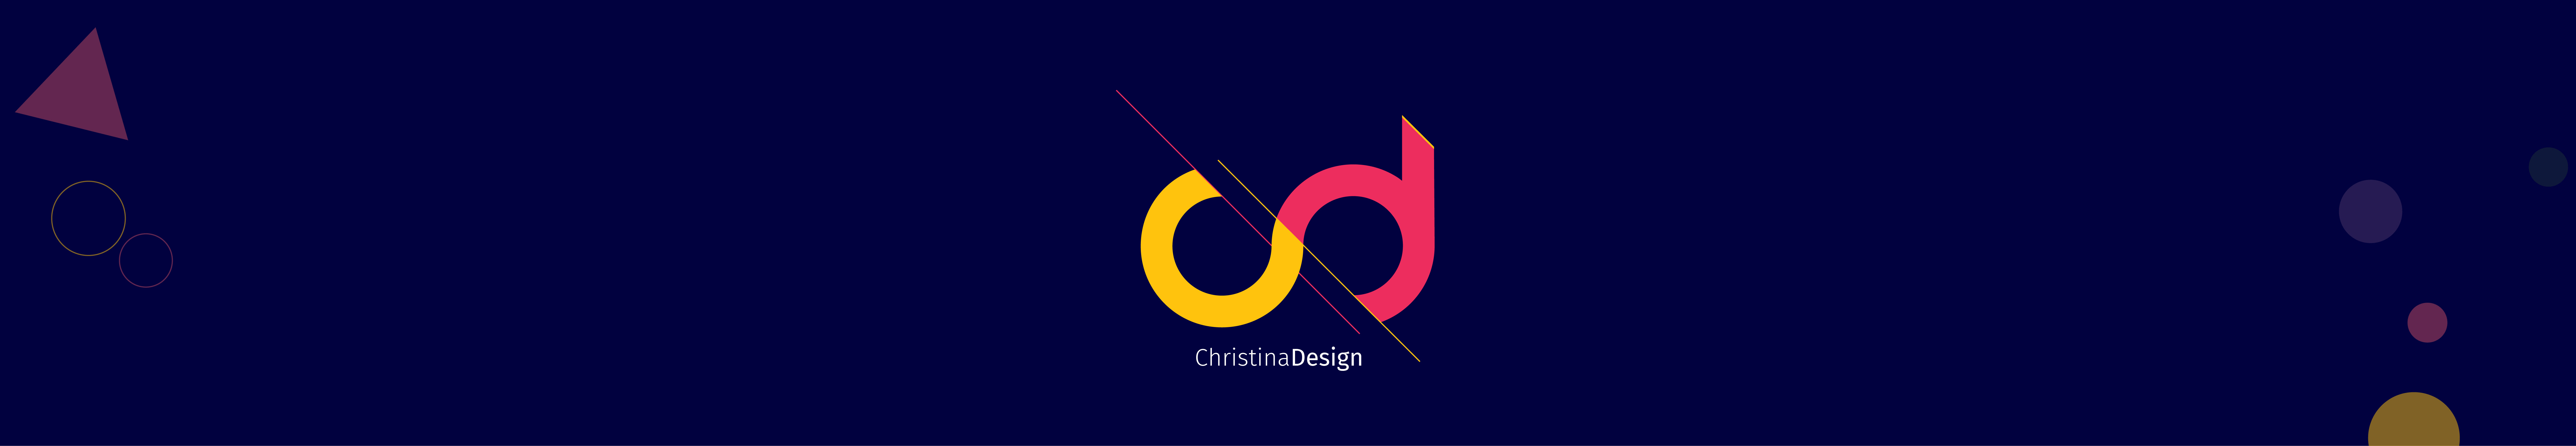 Christina El Haber profil başlığı